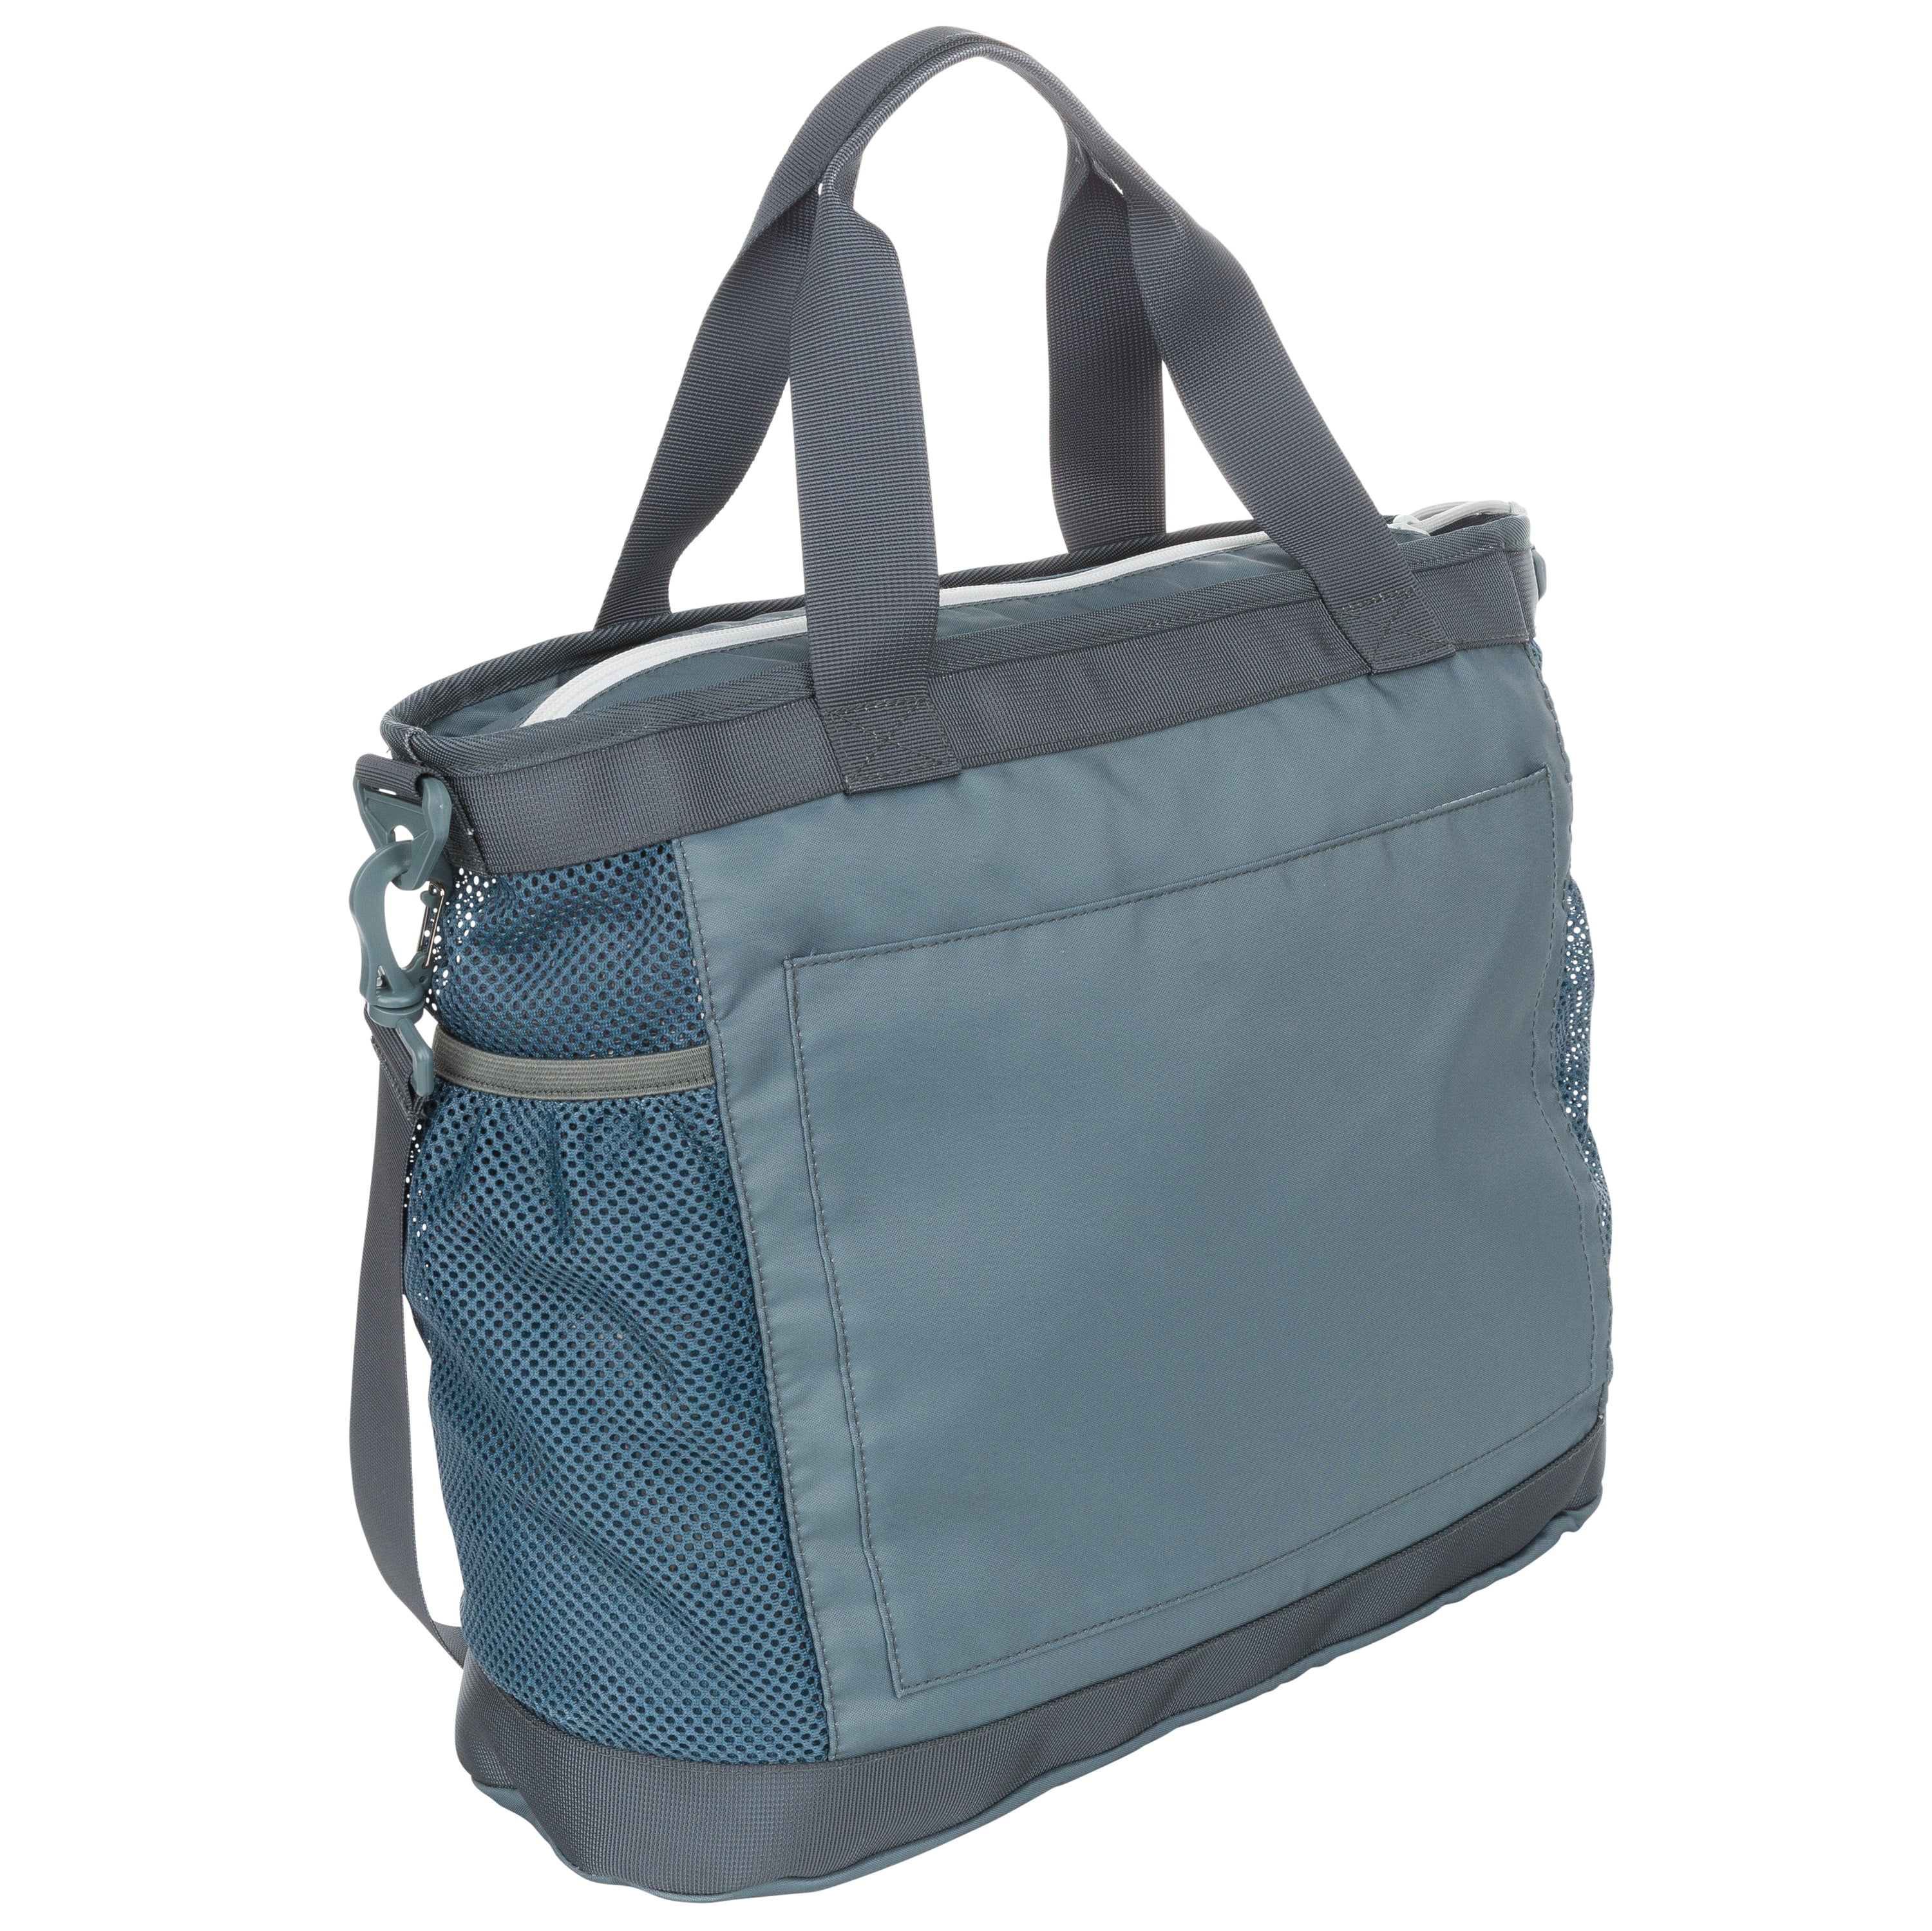 Avia 24 Liter Balsam Green Yoga Mat Carry Tote Sports Bag, Unisex,  Polyester 